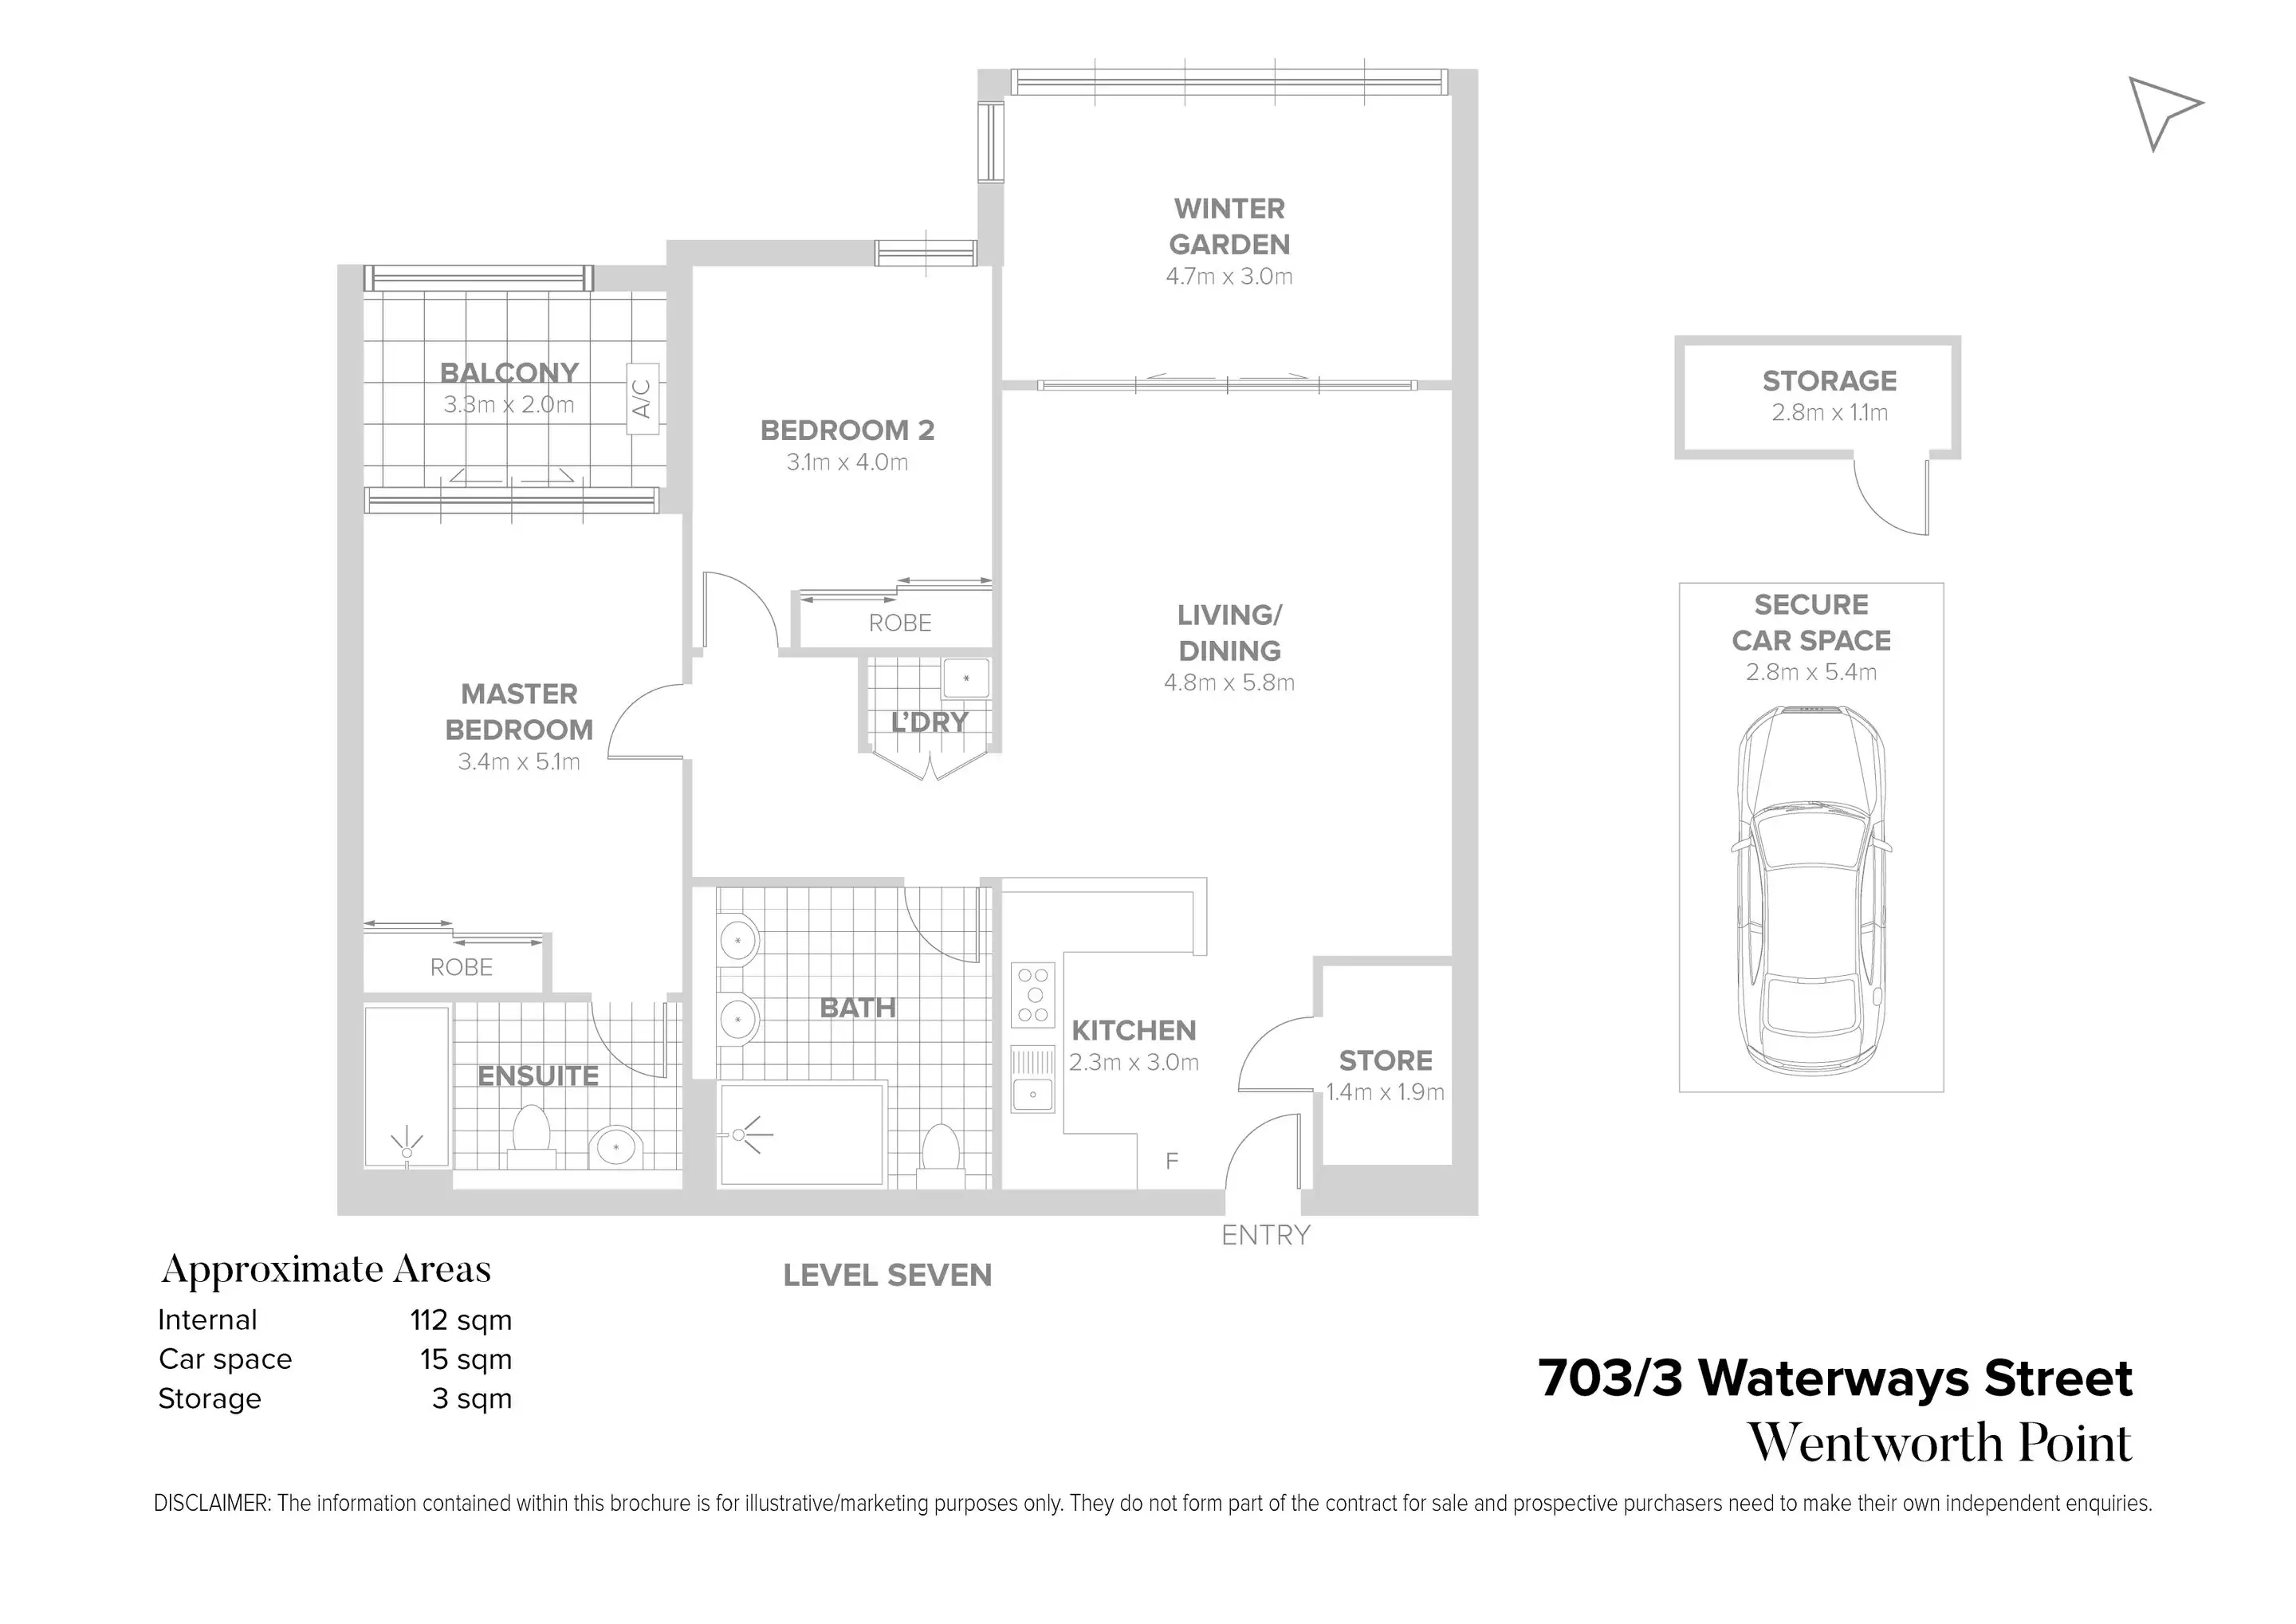 703/3 Waterways Street, Wentworth Point Sold by Chidiac Realty - floorplan